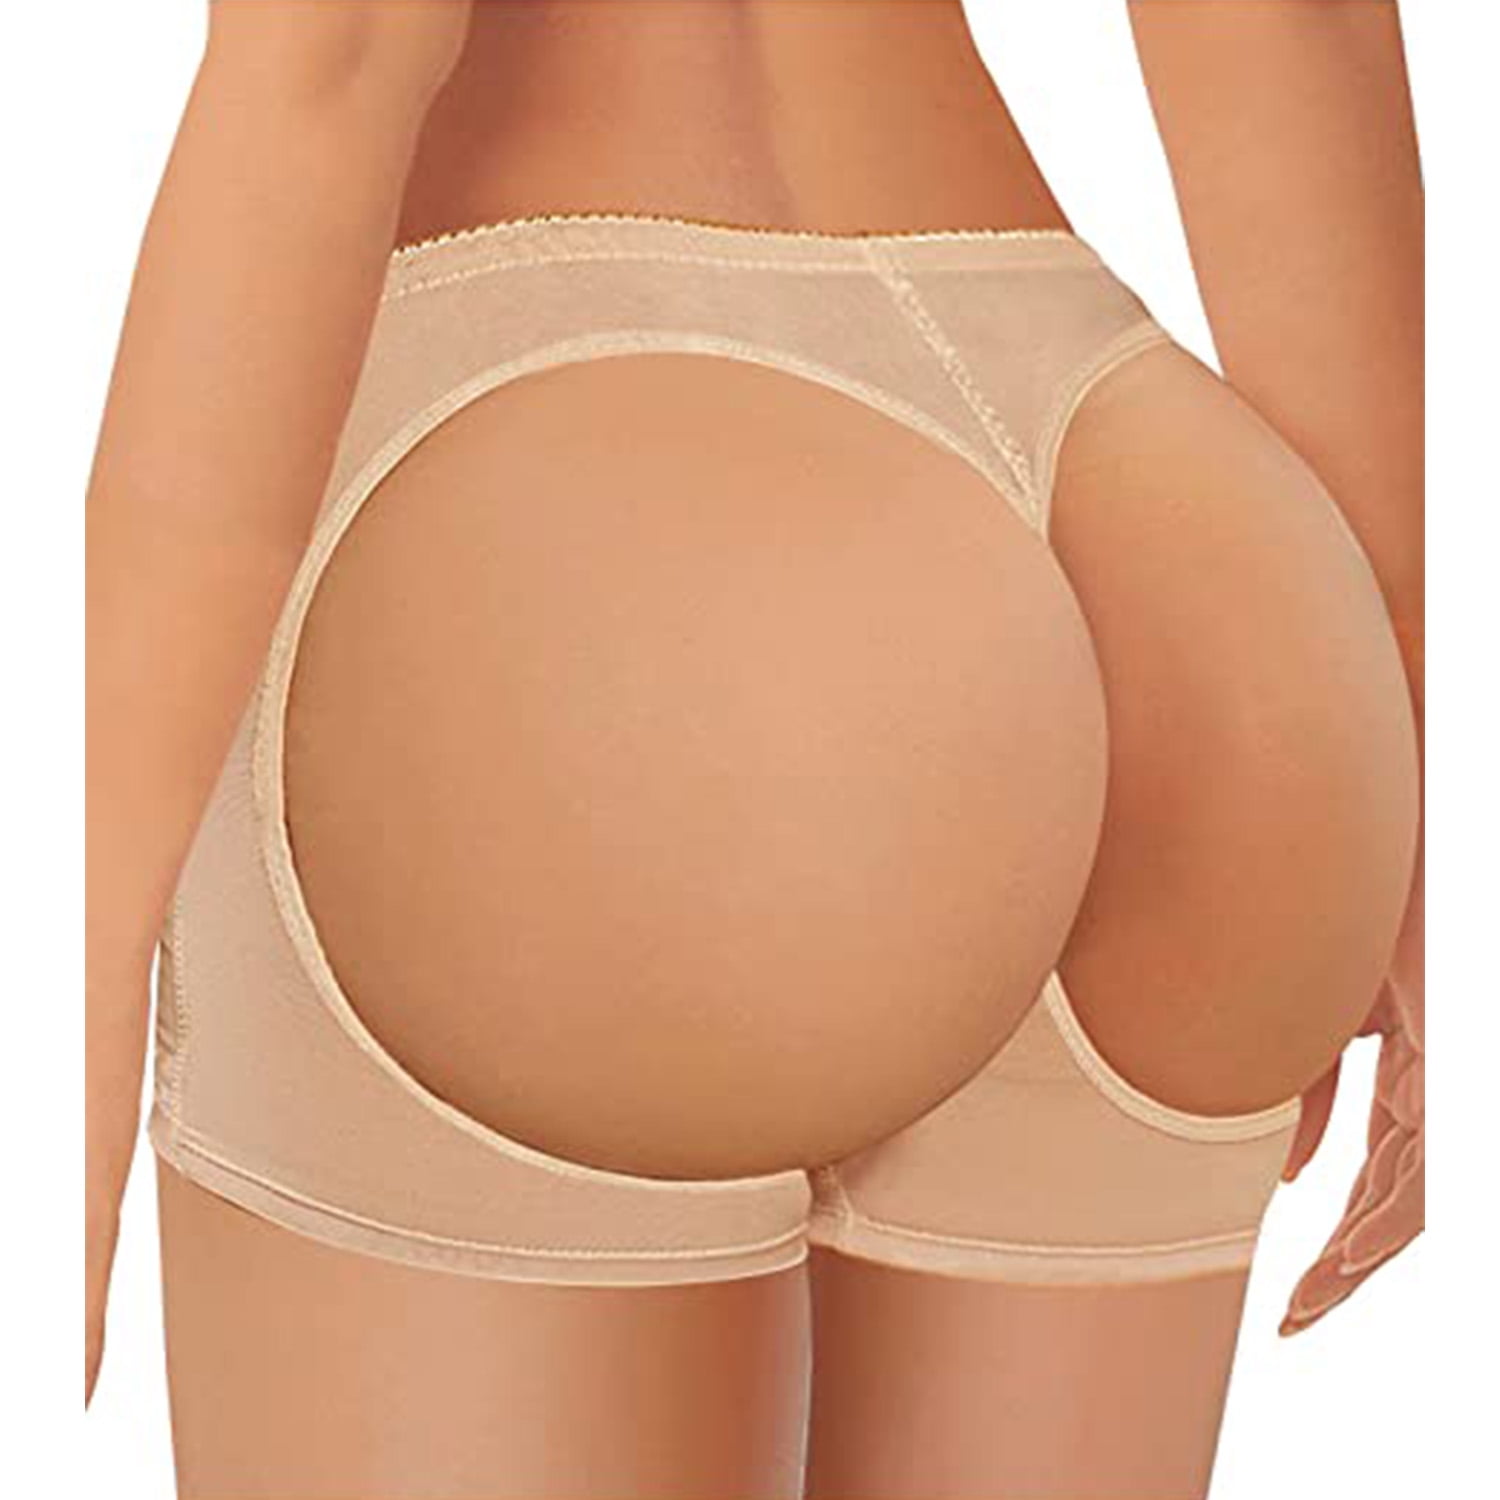 craig nevitt recommends big booty in underwear pic